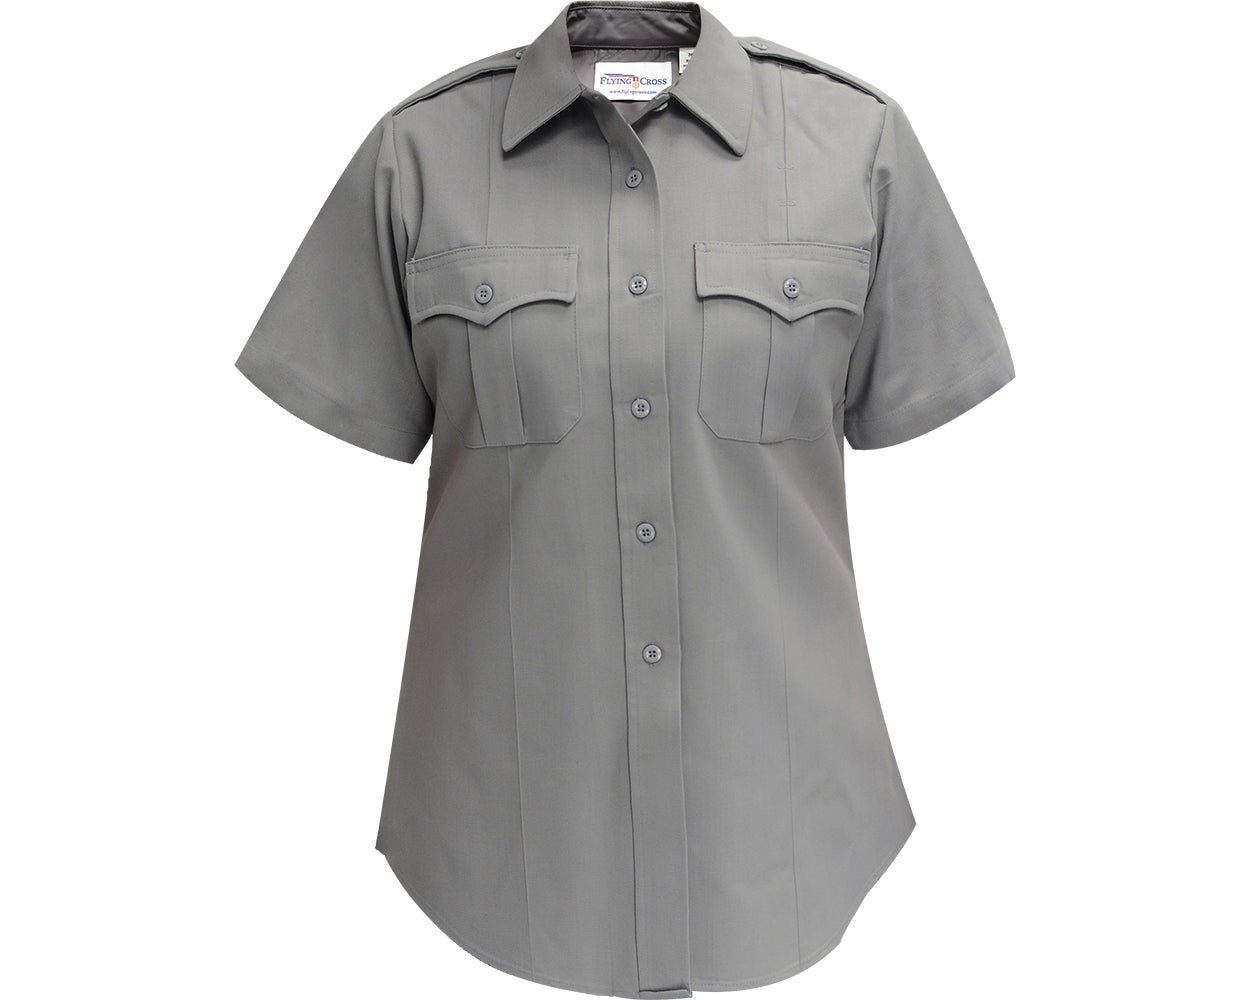 Flying Cross Command Women's 100% Polyester Short Sleeve Uniform Shirt 176R78 - Gray, 42